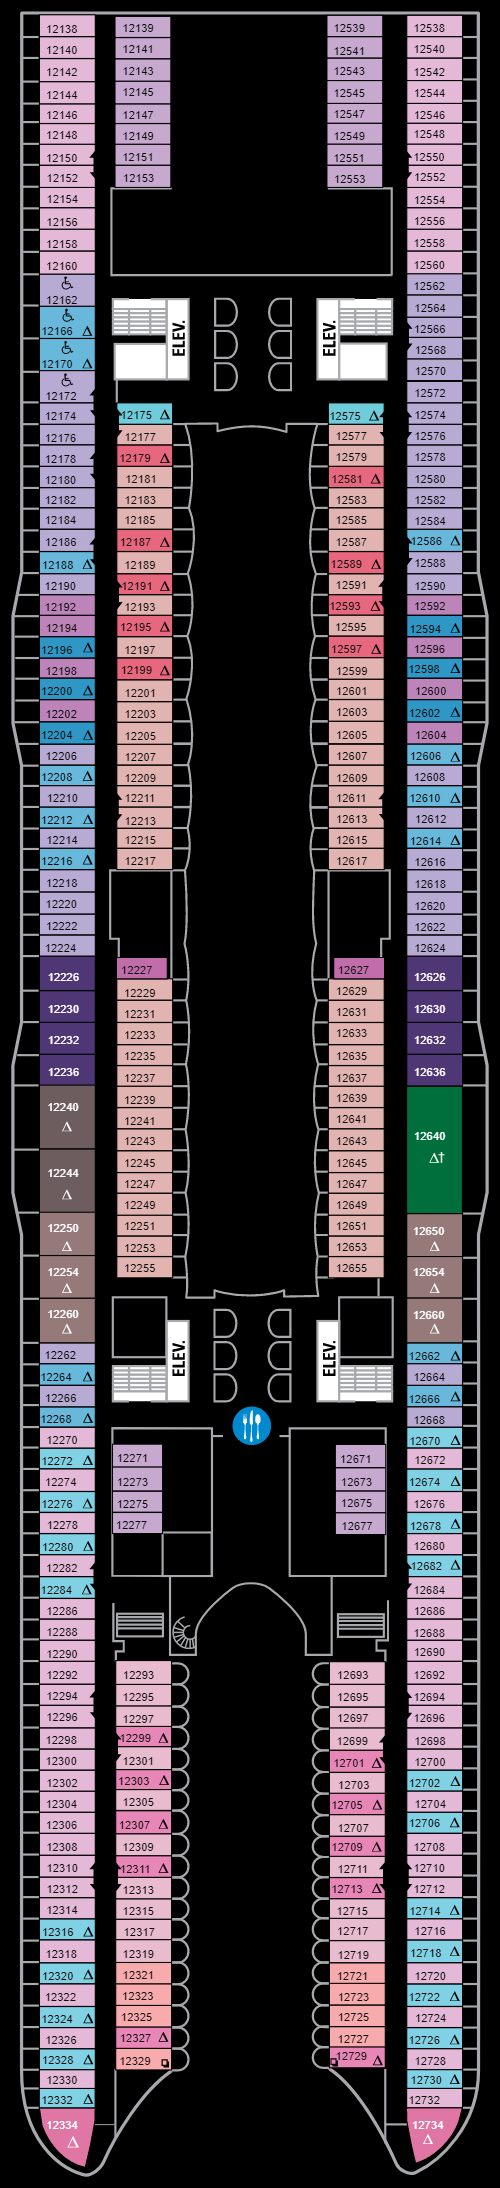 Deck 12 (02 May 2020 - 24 Apr 2021)